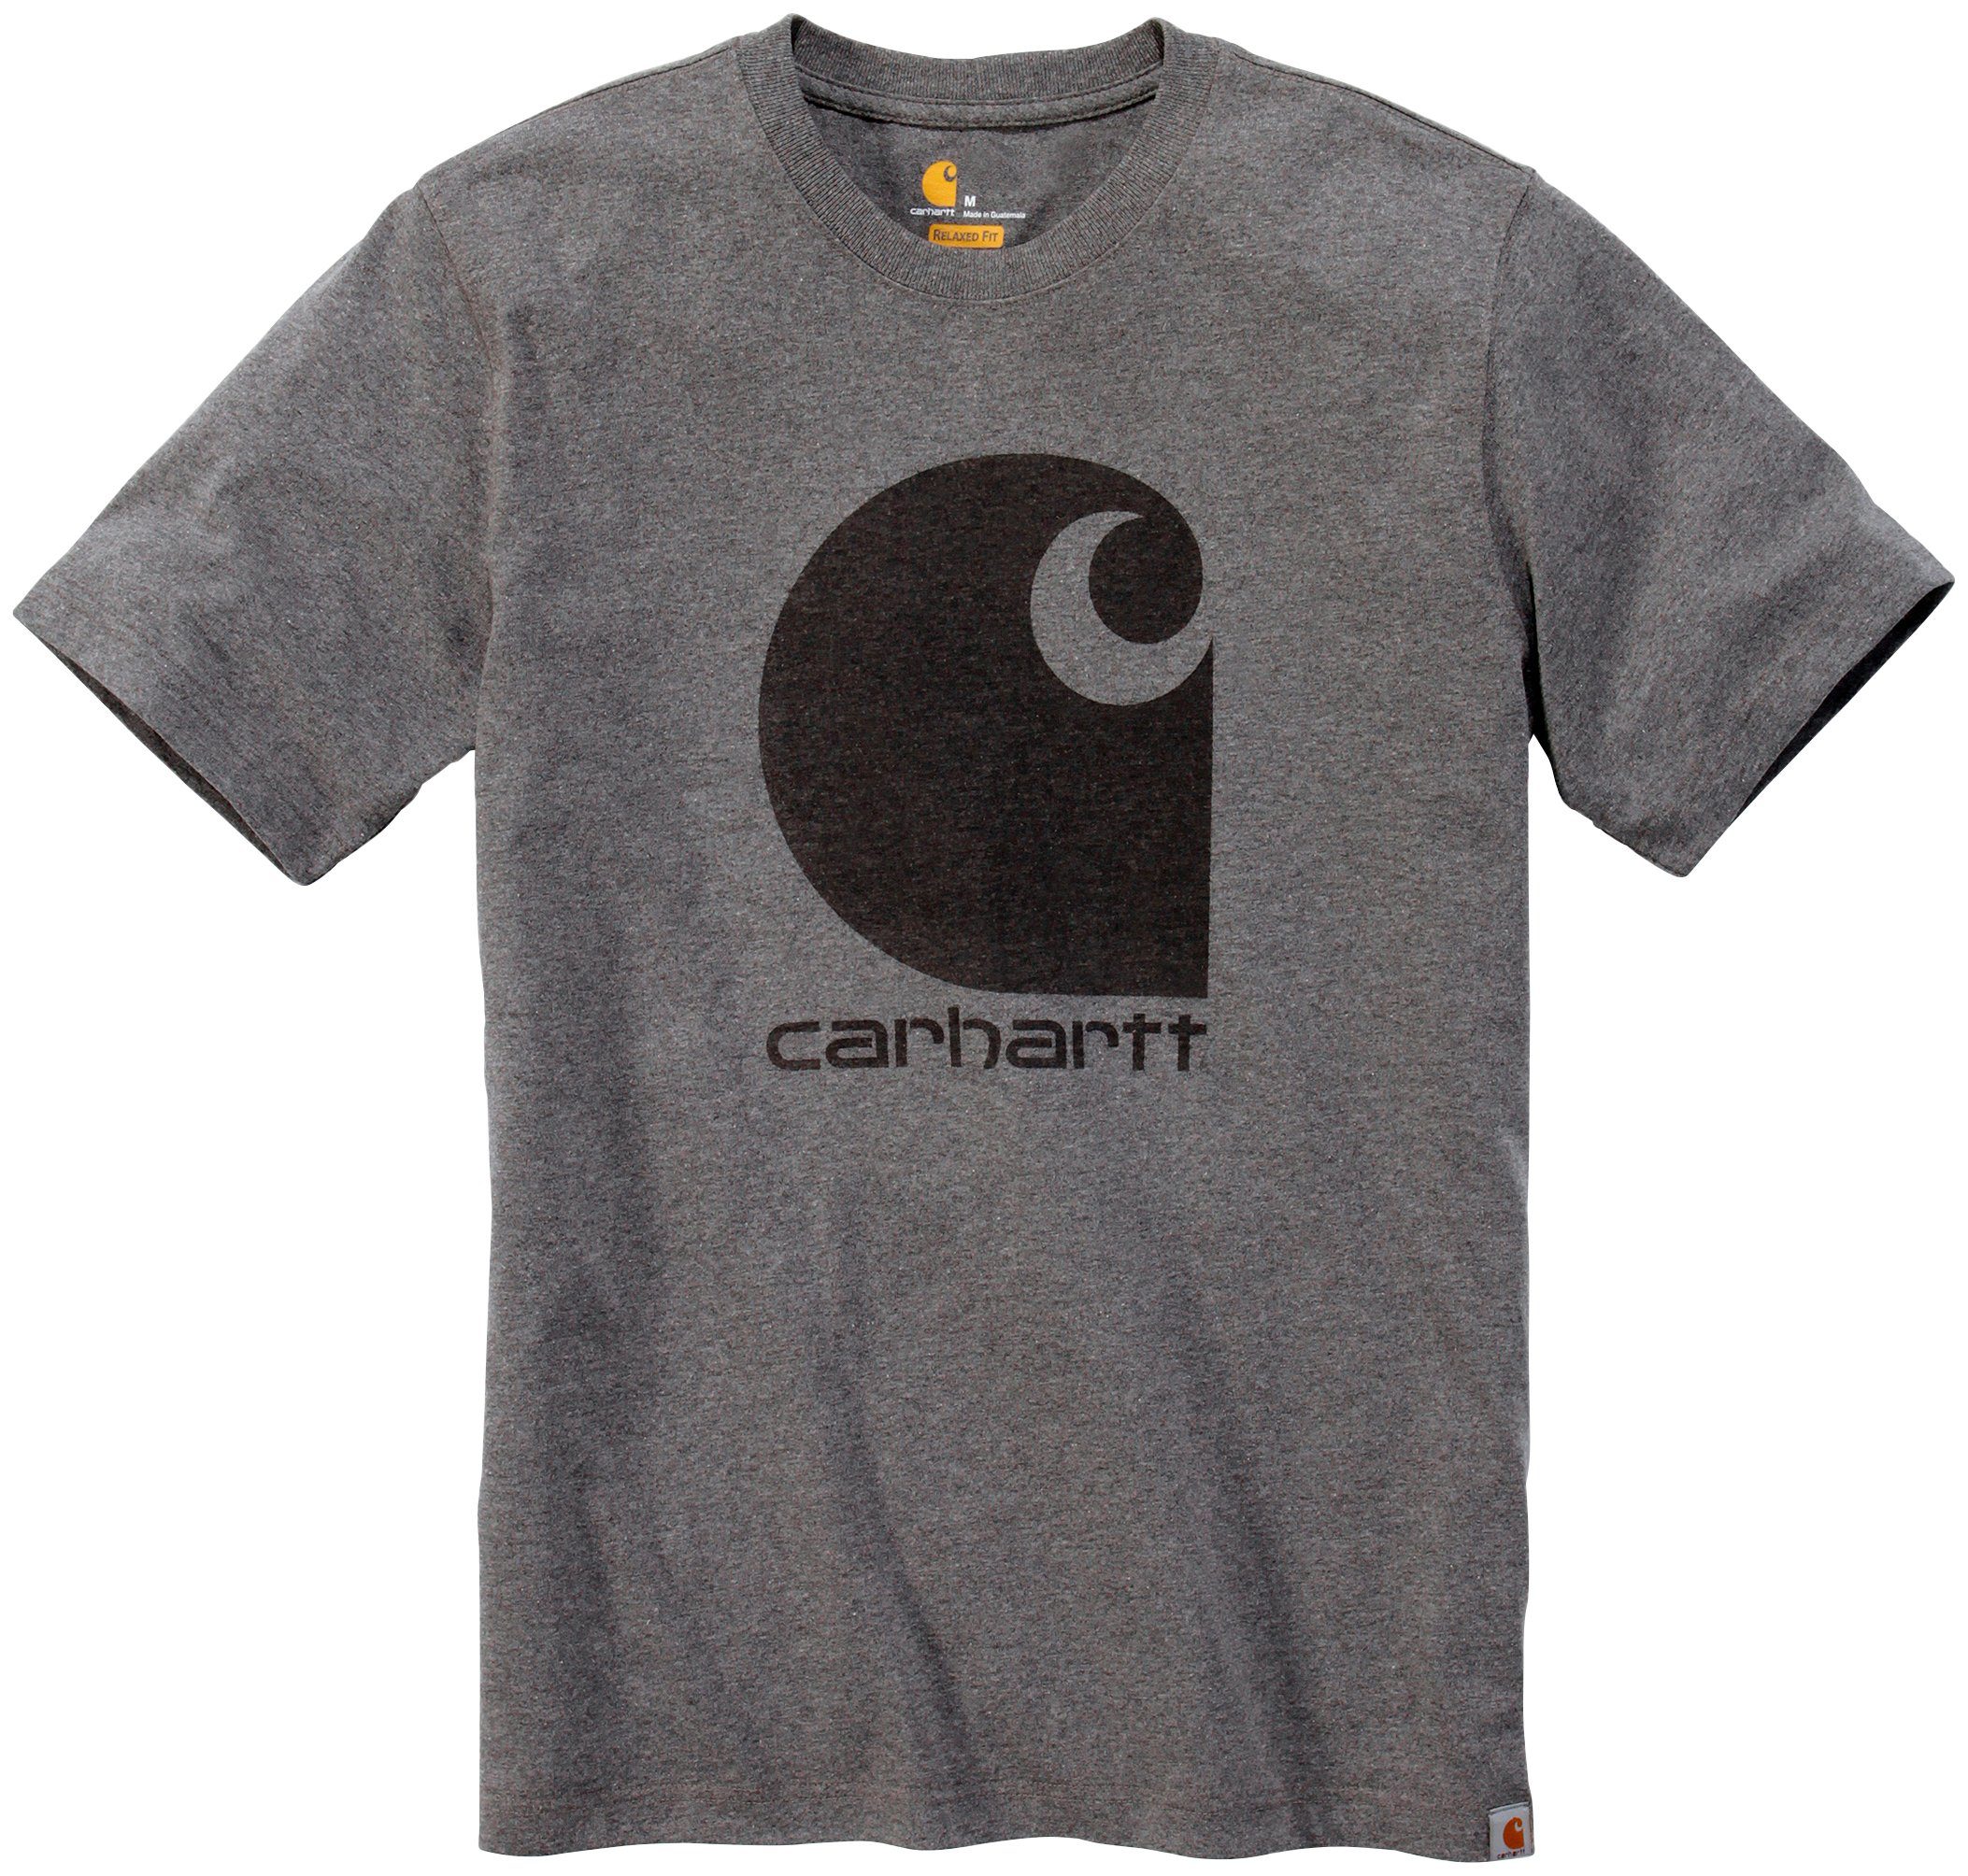 Carhartt T-Shirt »C-LOGO GRAPHIC S/S« kaufen | OTTO